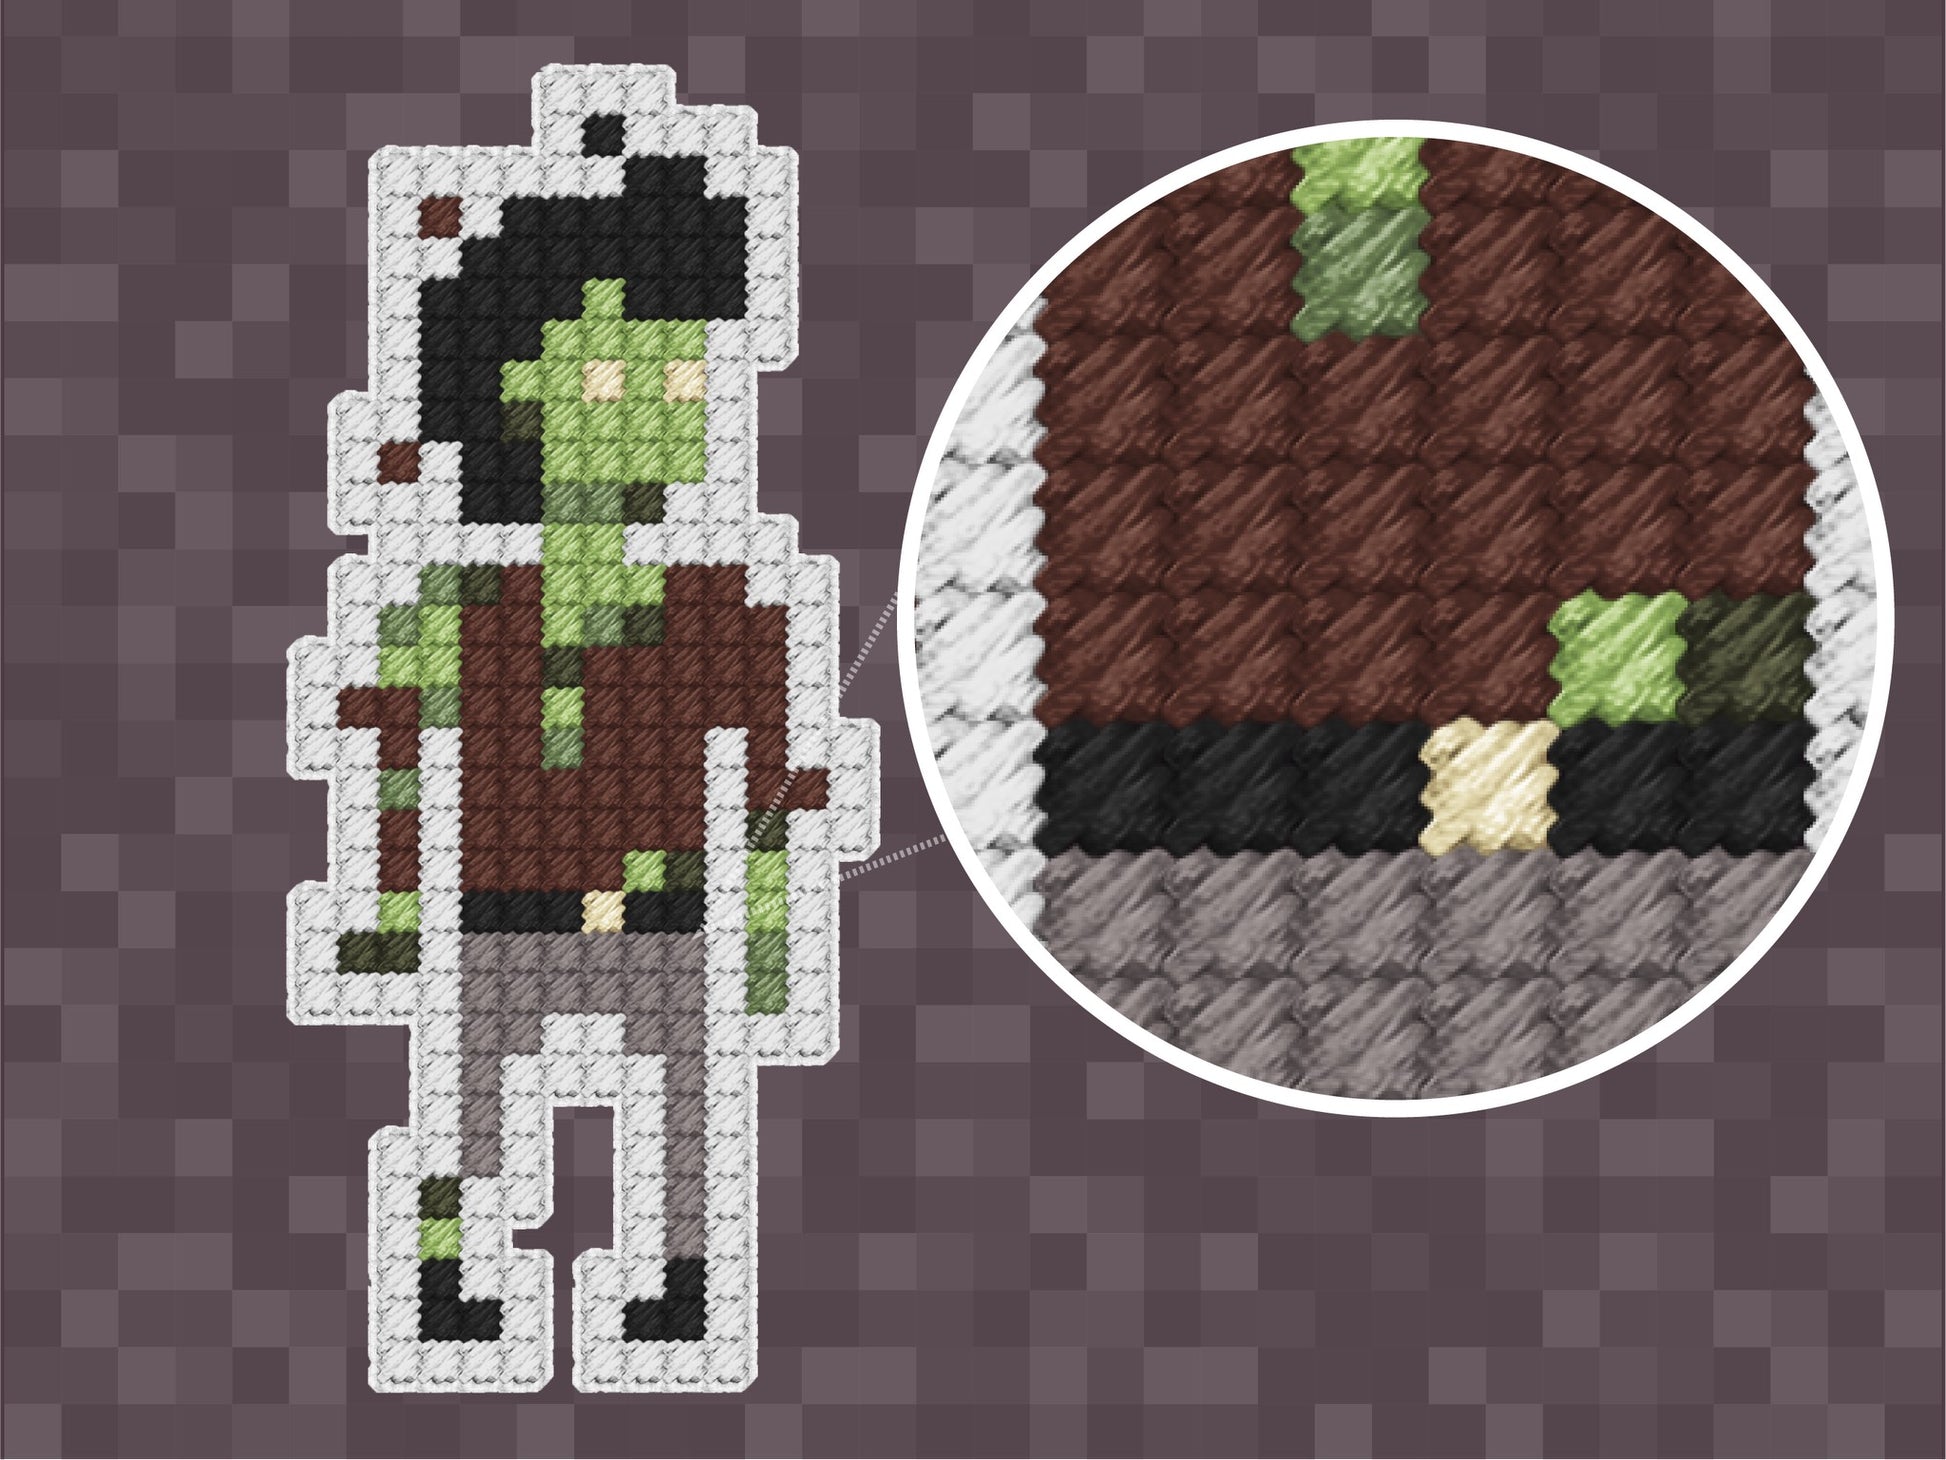 minecraft zombie pixel art